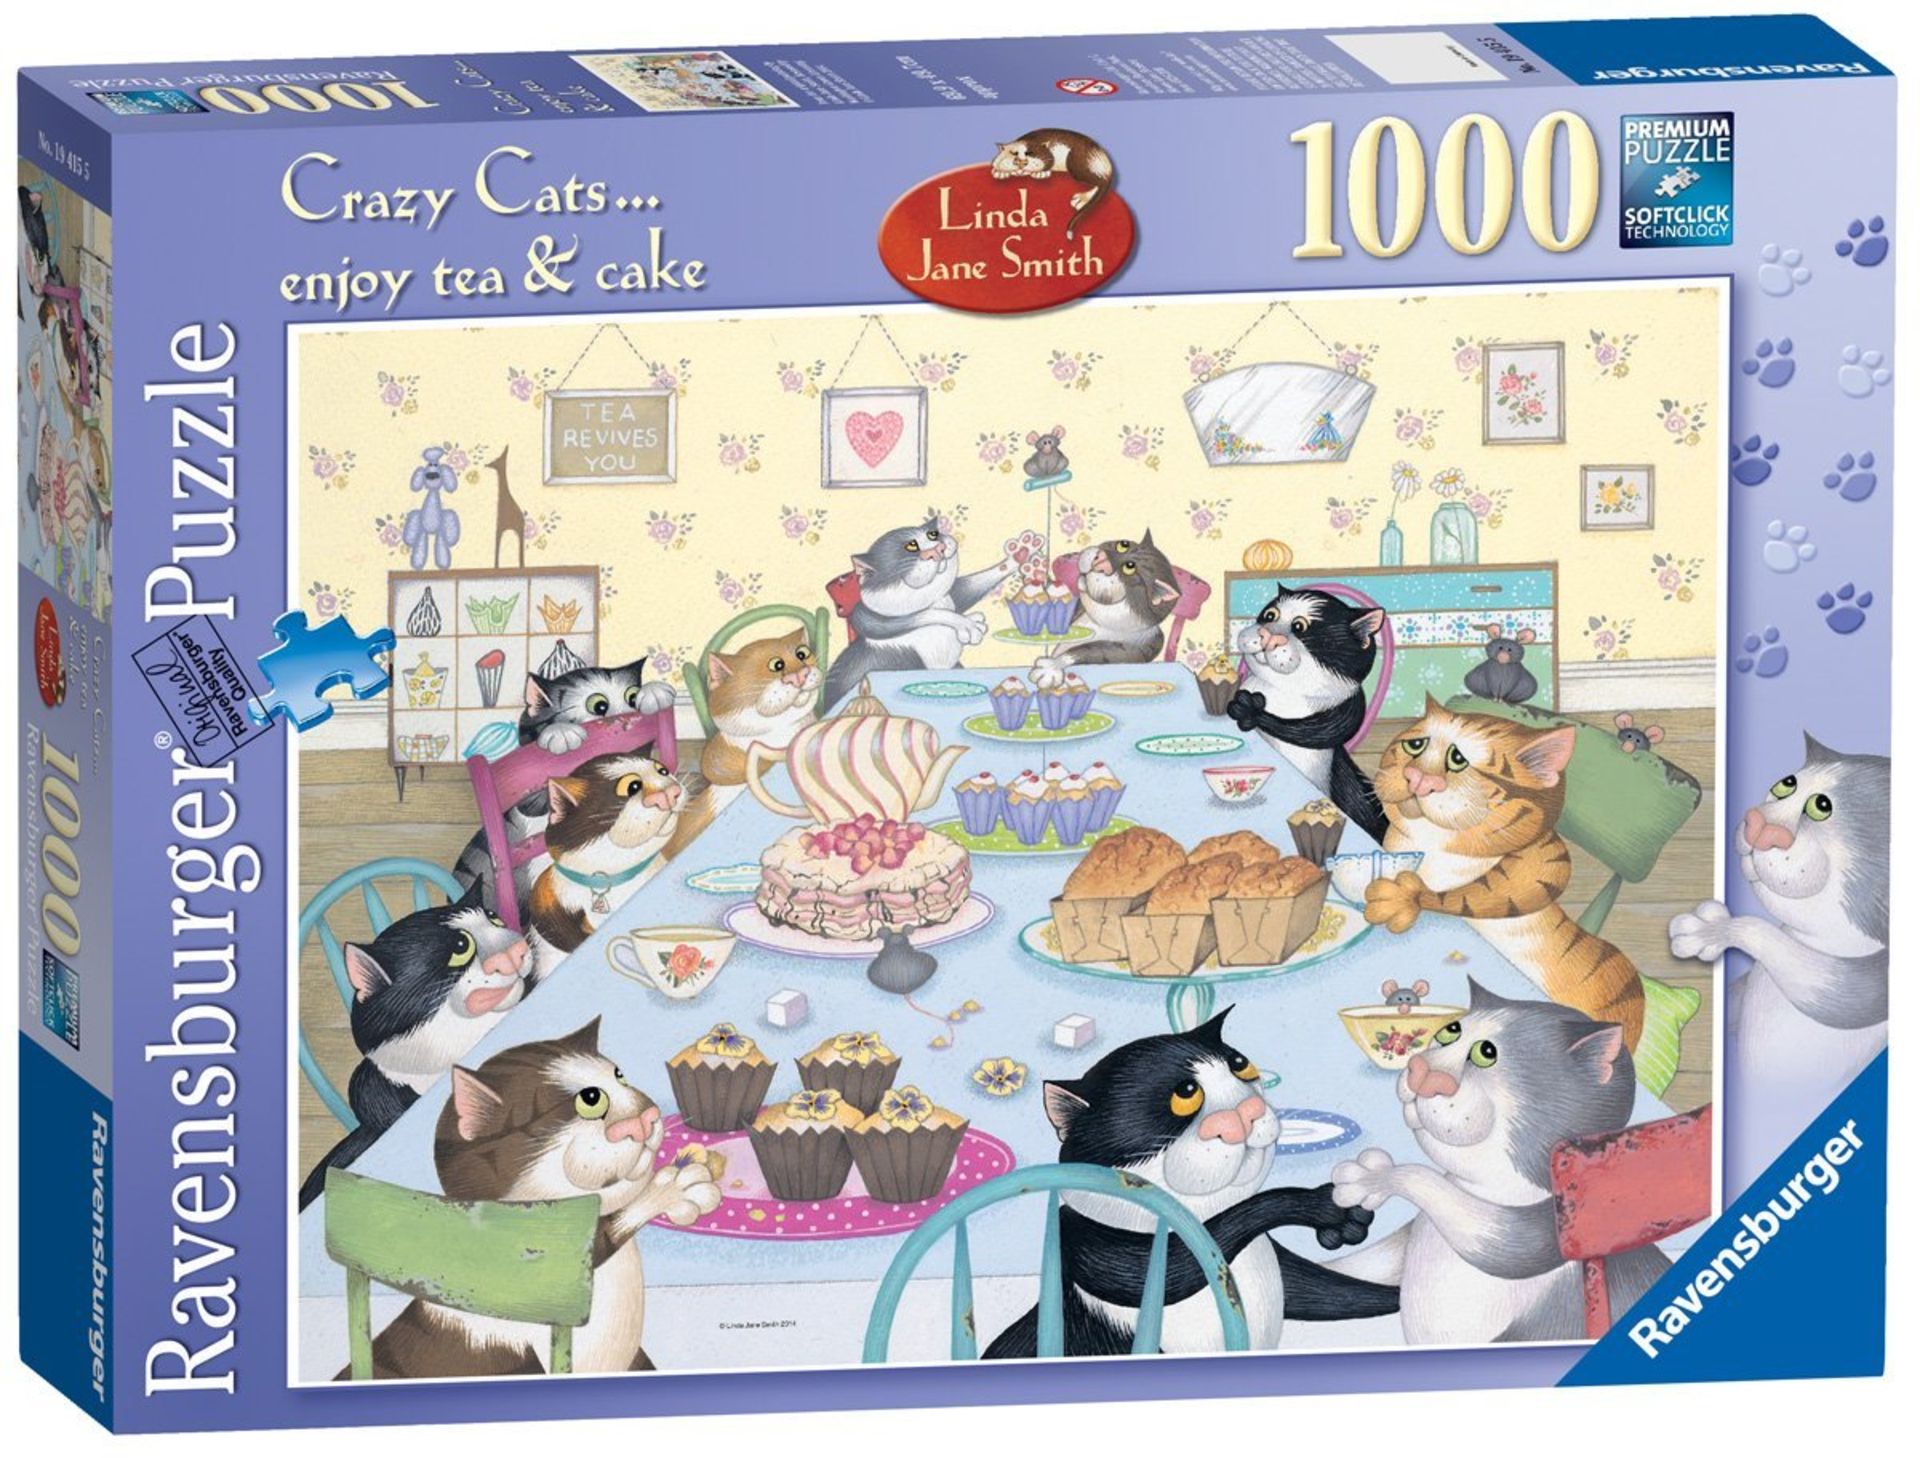 V Ravensburger Puzzle Crazy Cats enjoy tea and cake - Linda Jane Smith - 1000 pcs